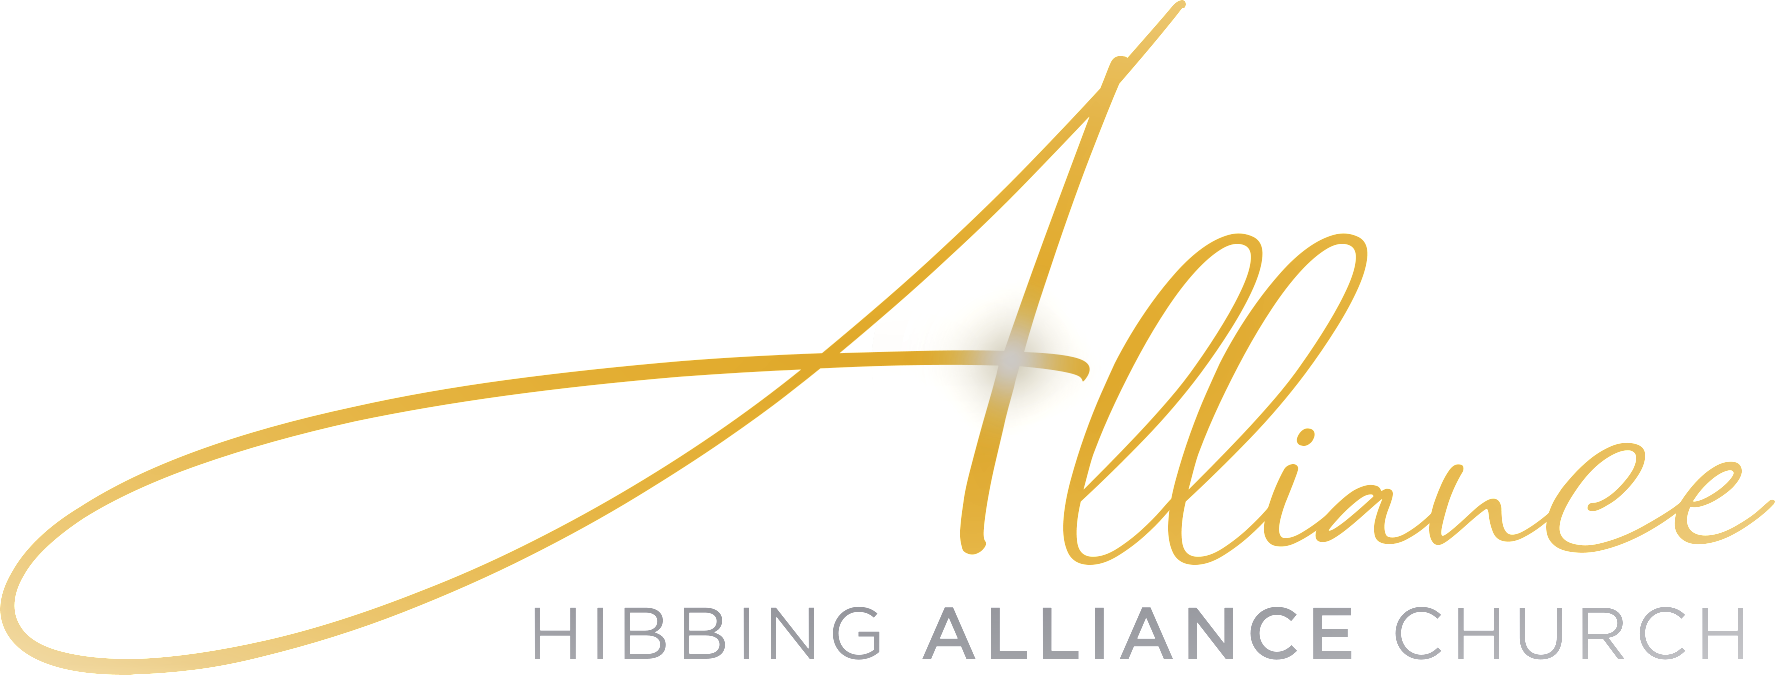 Hibbing Alliance Church